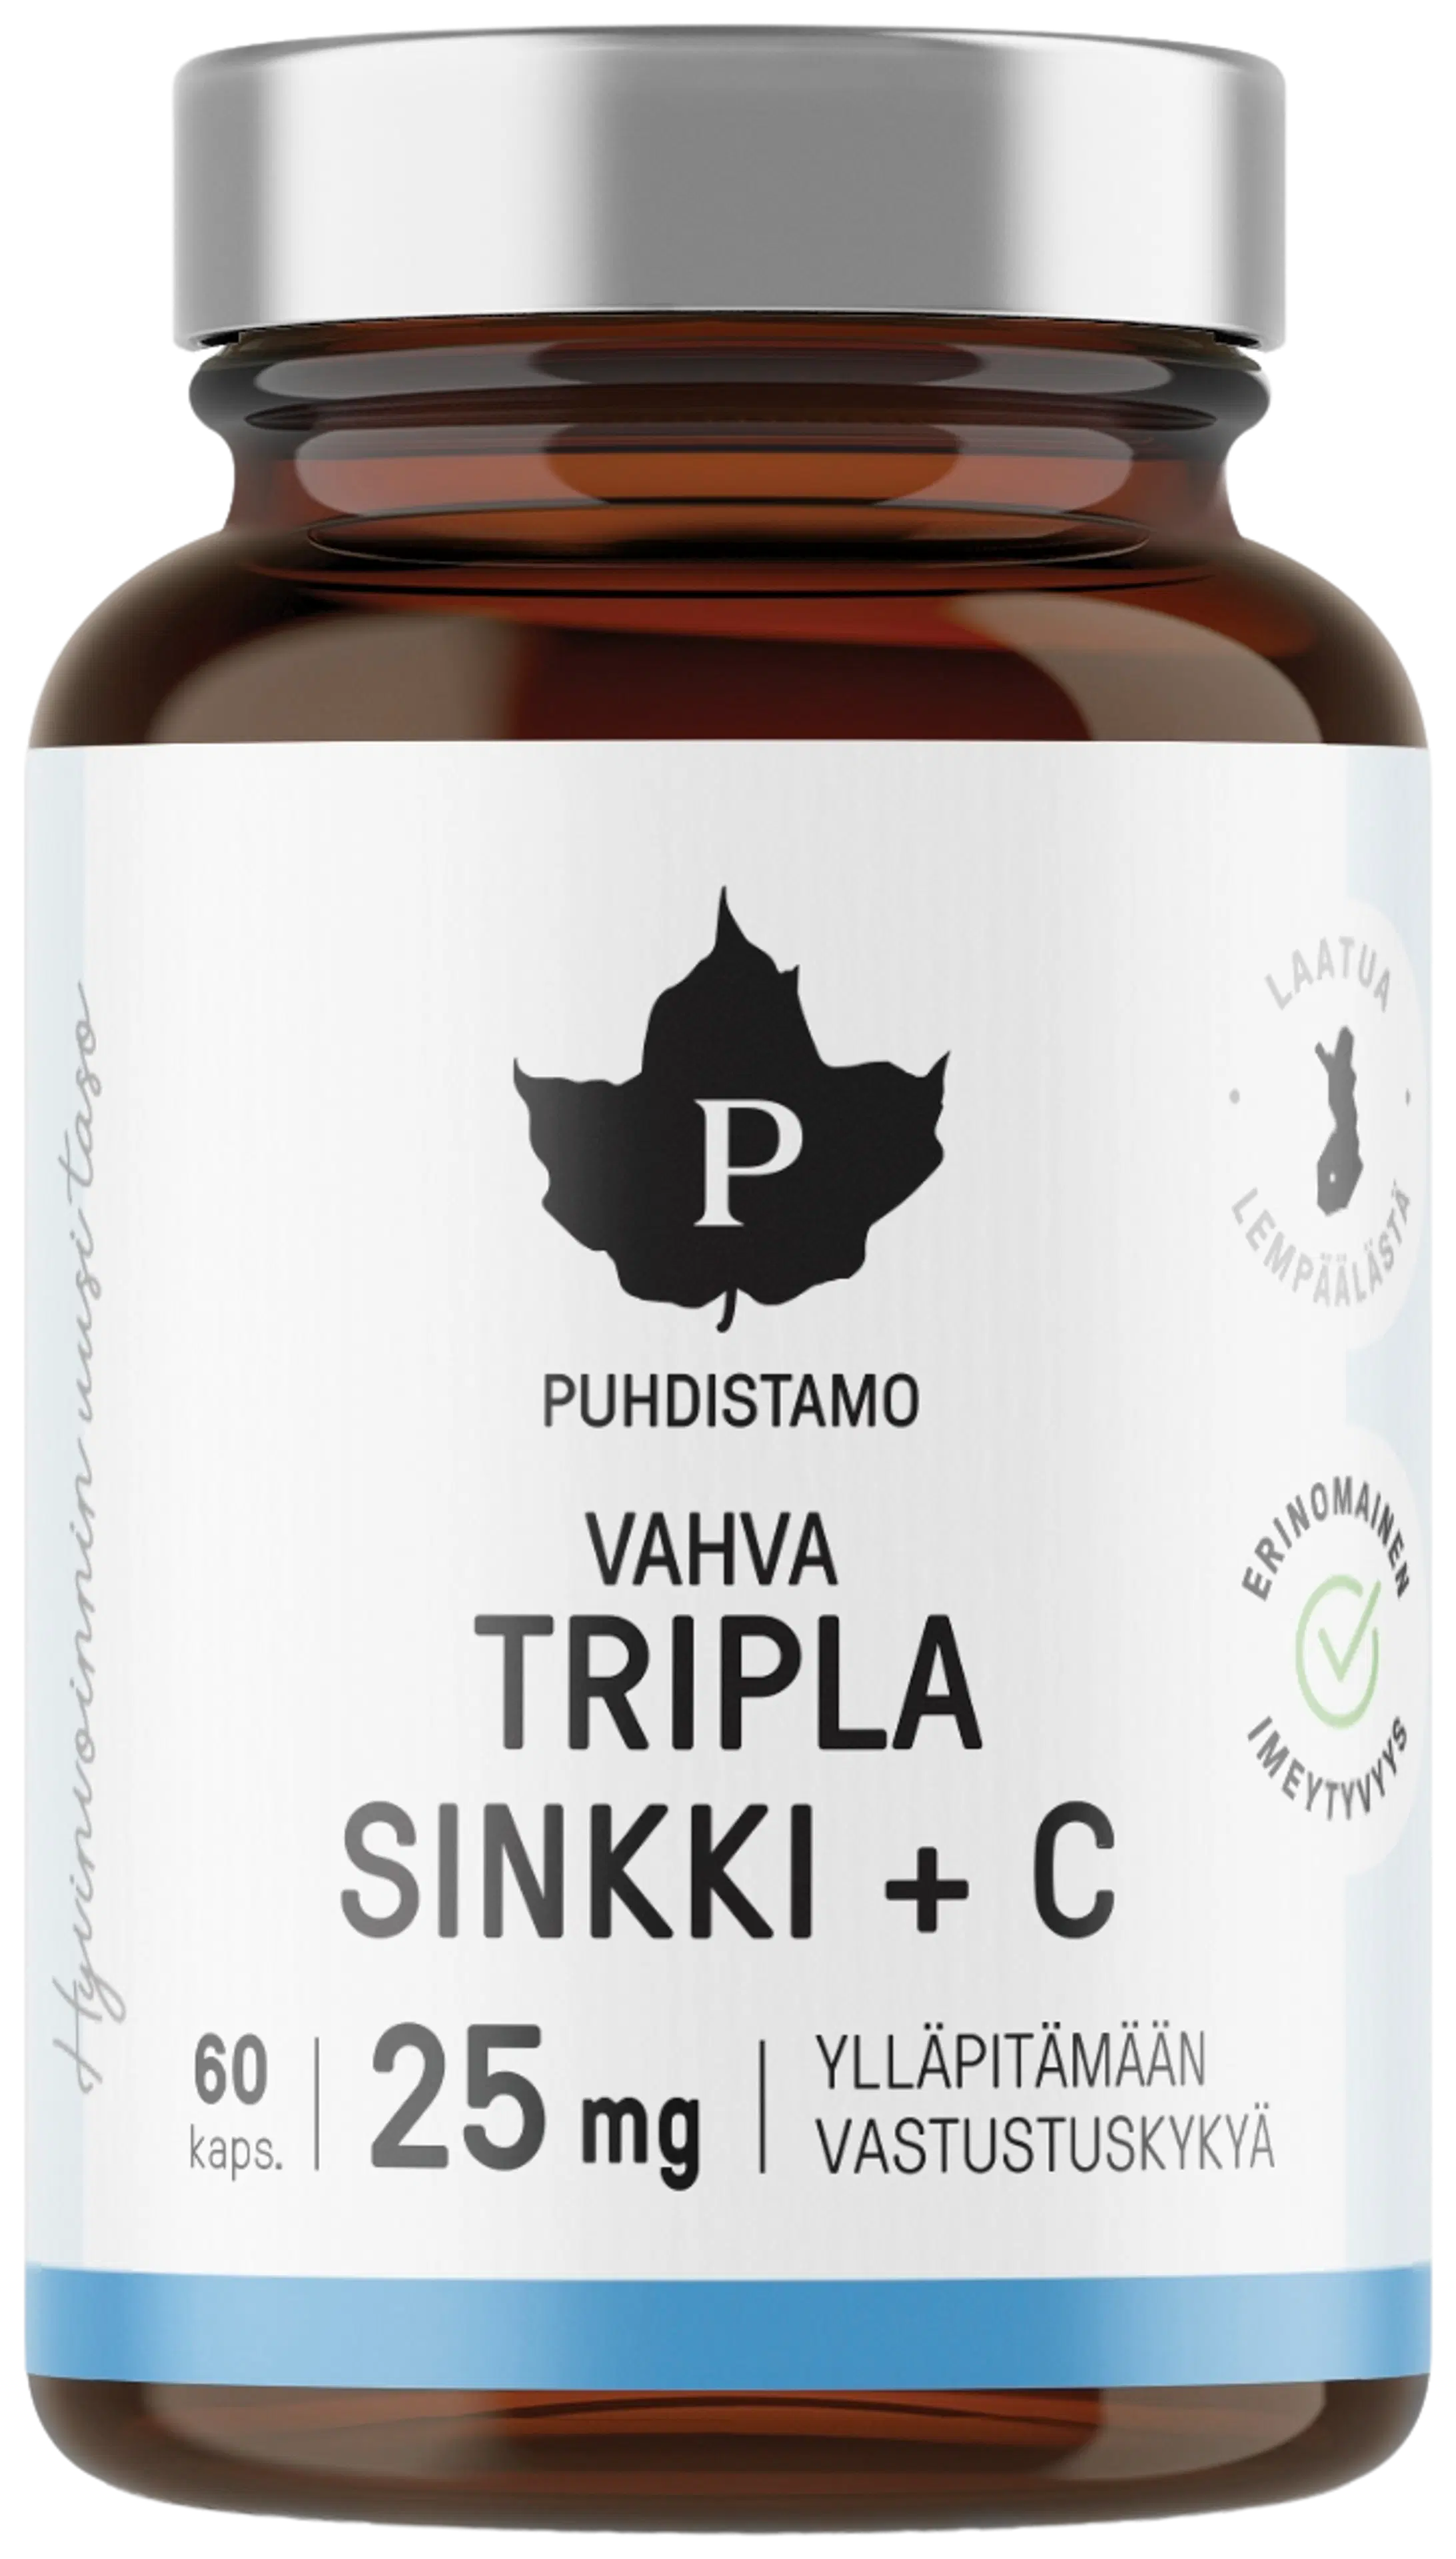 Puhdistamo Tripla Sinkki + C 25 mg 60 kapselia